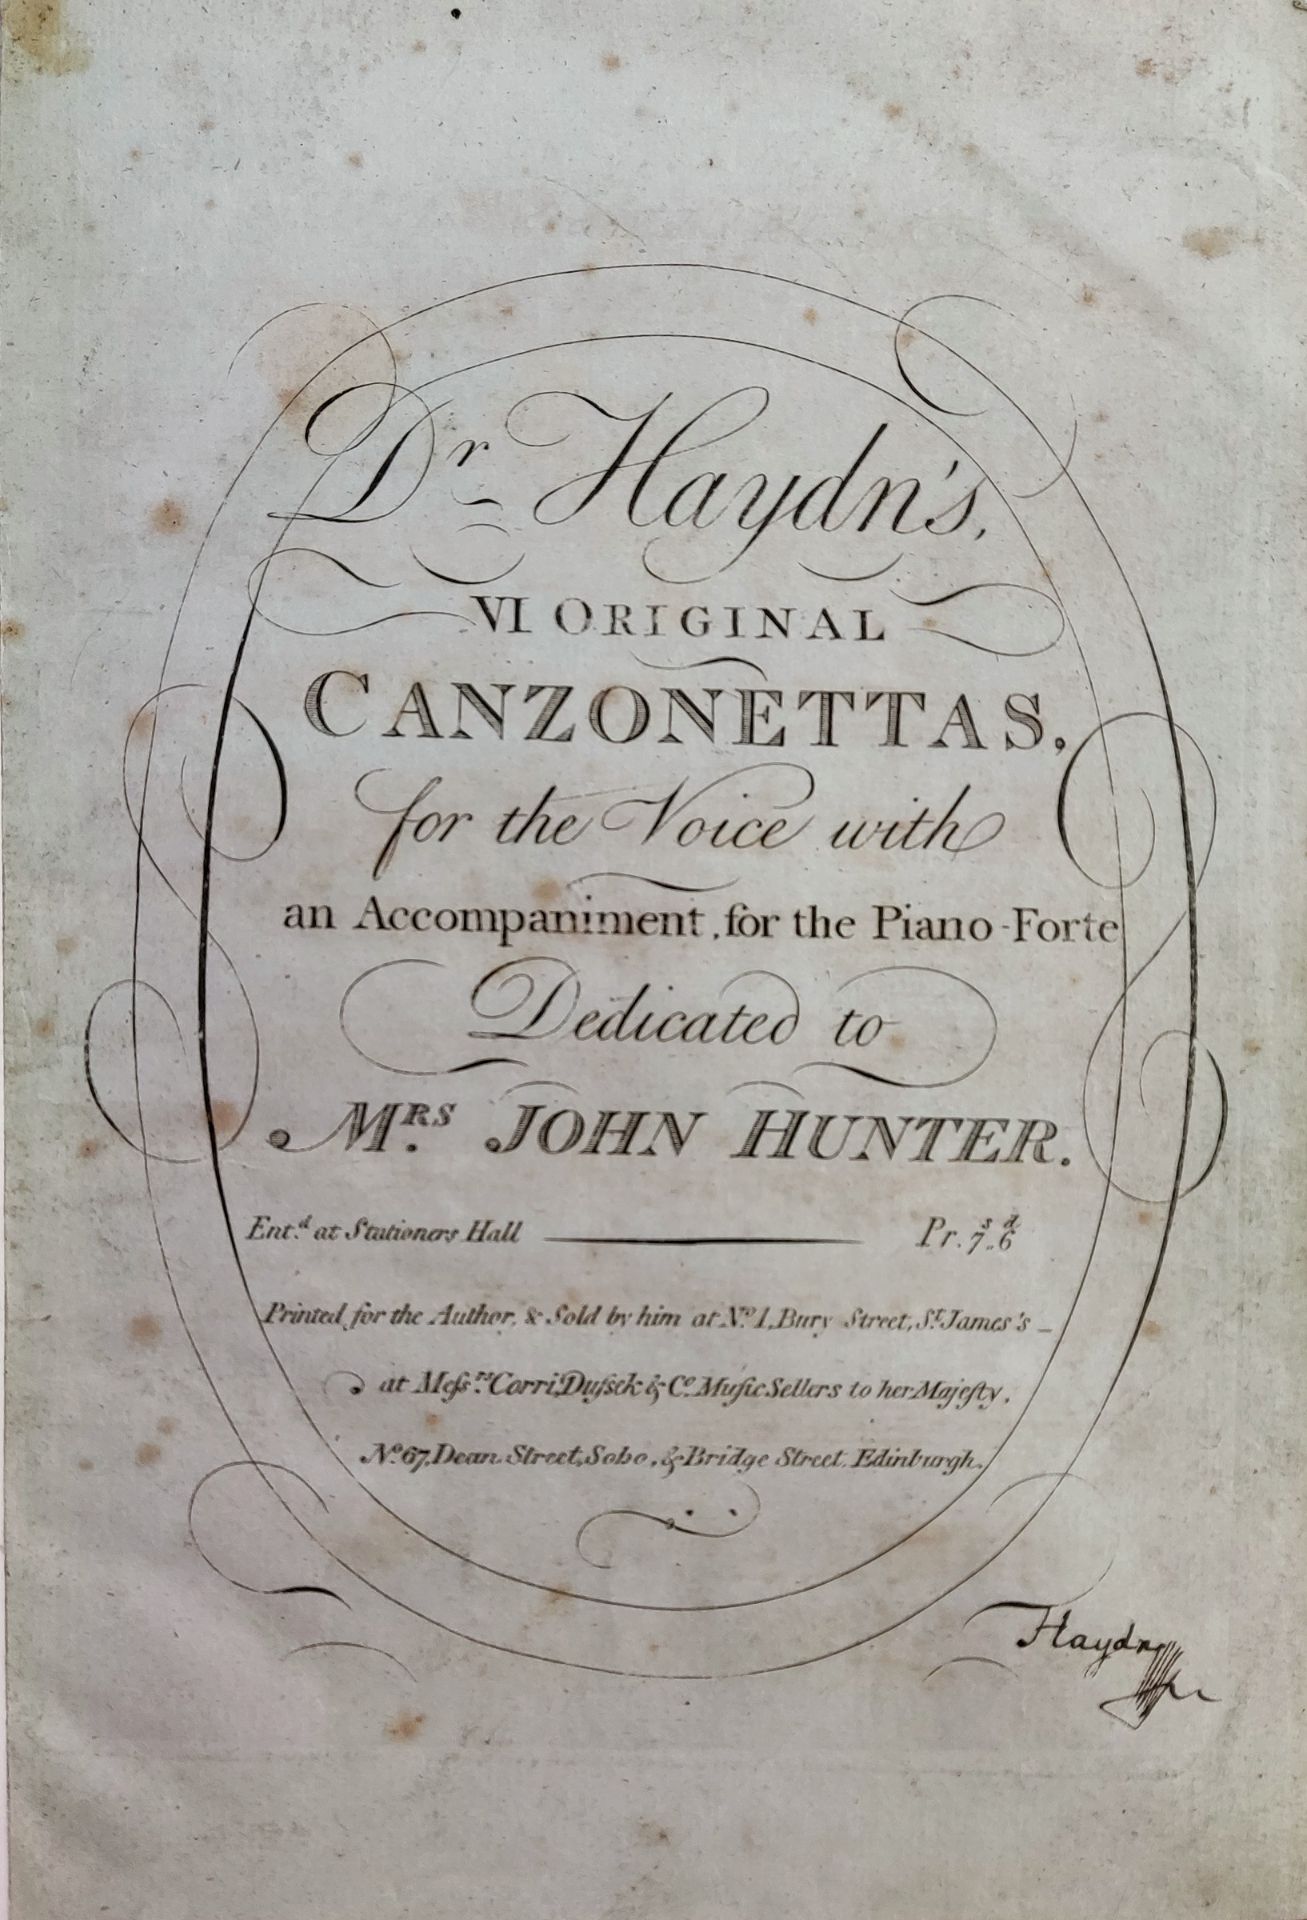 HAYDN JOSEPH: (1732-1809) Austrian composer of the Classical period.